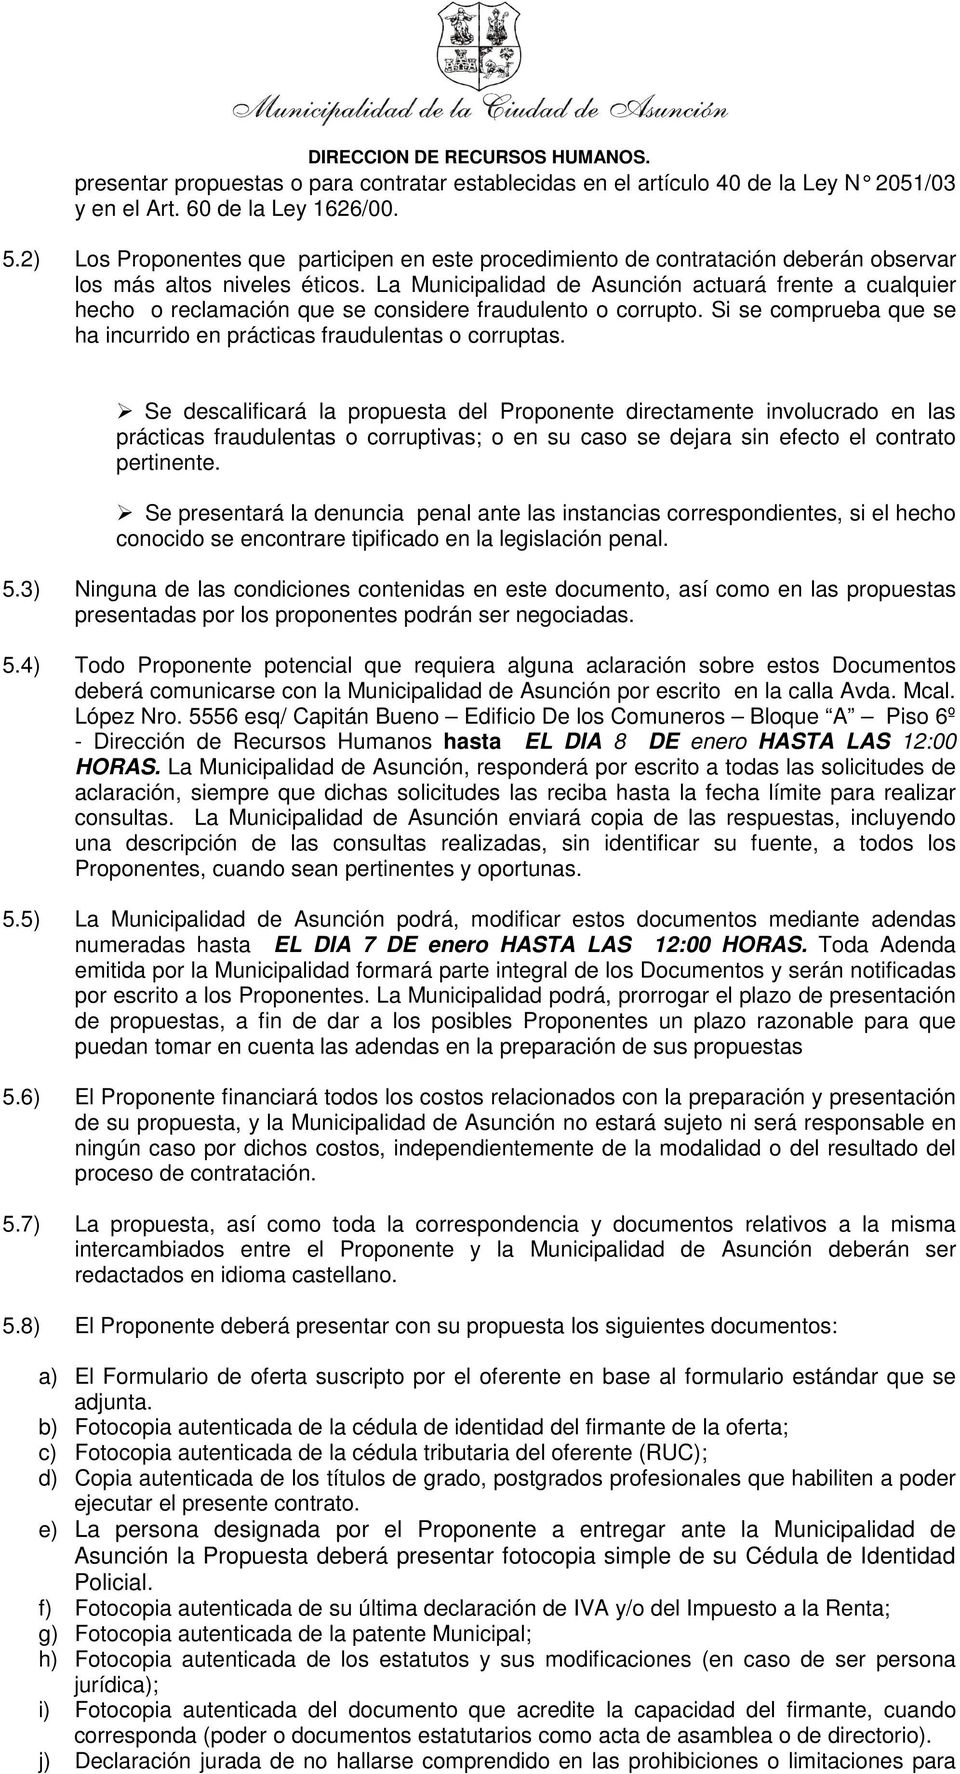 La Municipalidad de Asunción actuará frente a cualquier hecho o reclamación que se considere fraudulento o corrupto. Si se comprueba que se ha incurrido en prácticas fraudulentas o corruptas.